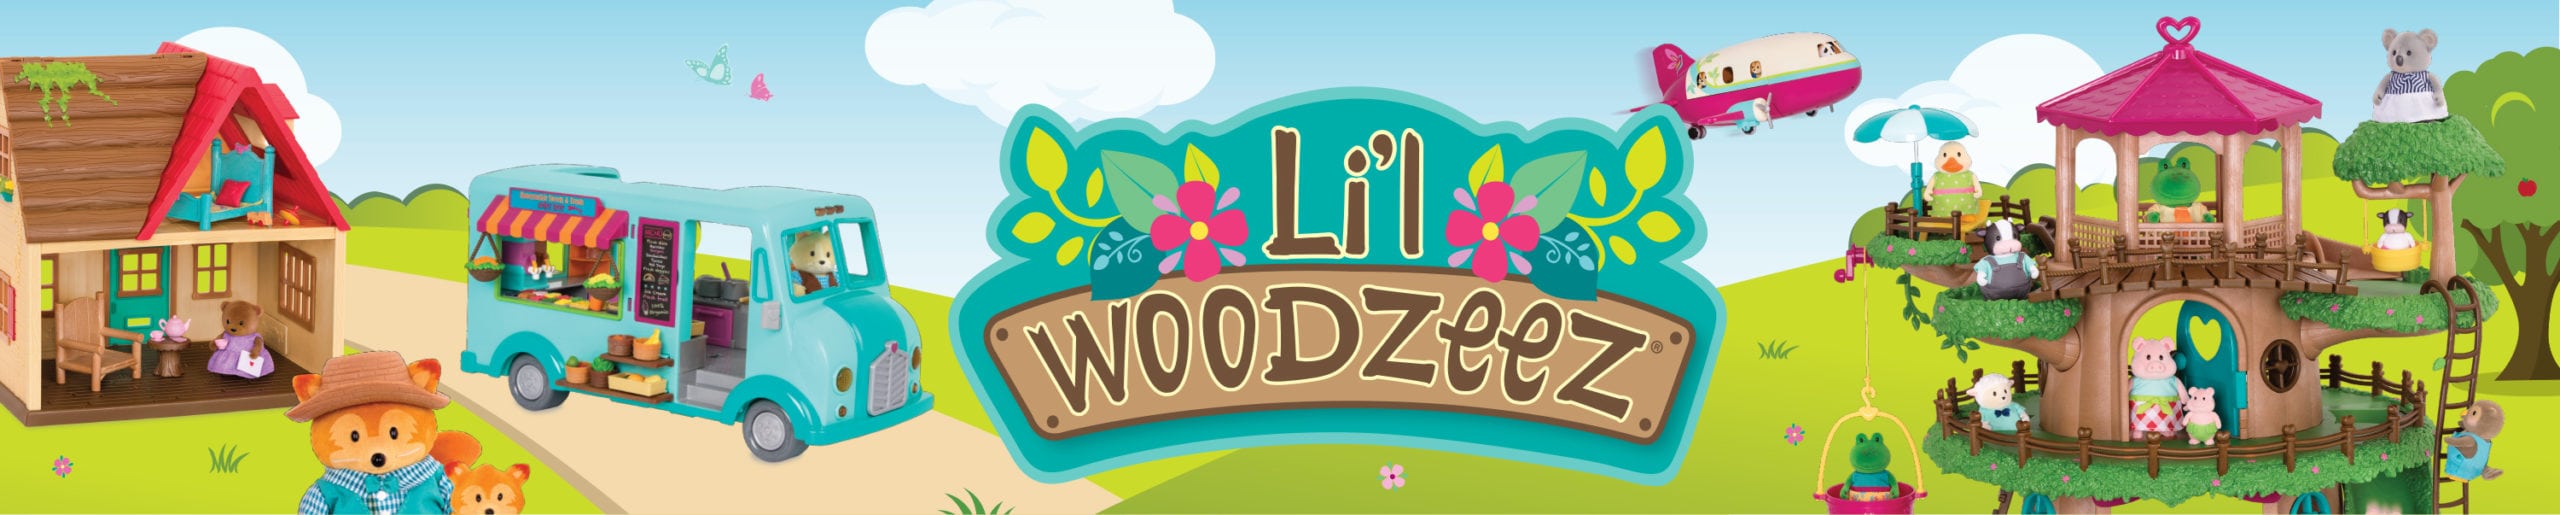 Li'l Woodzeez Egypt